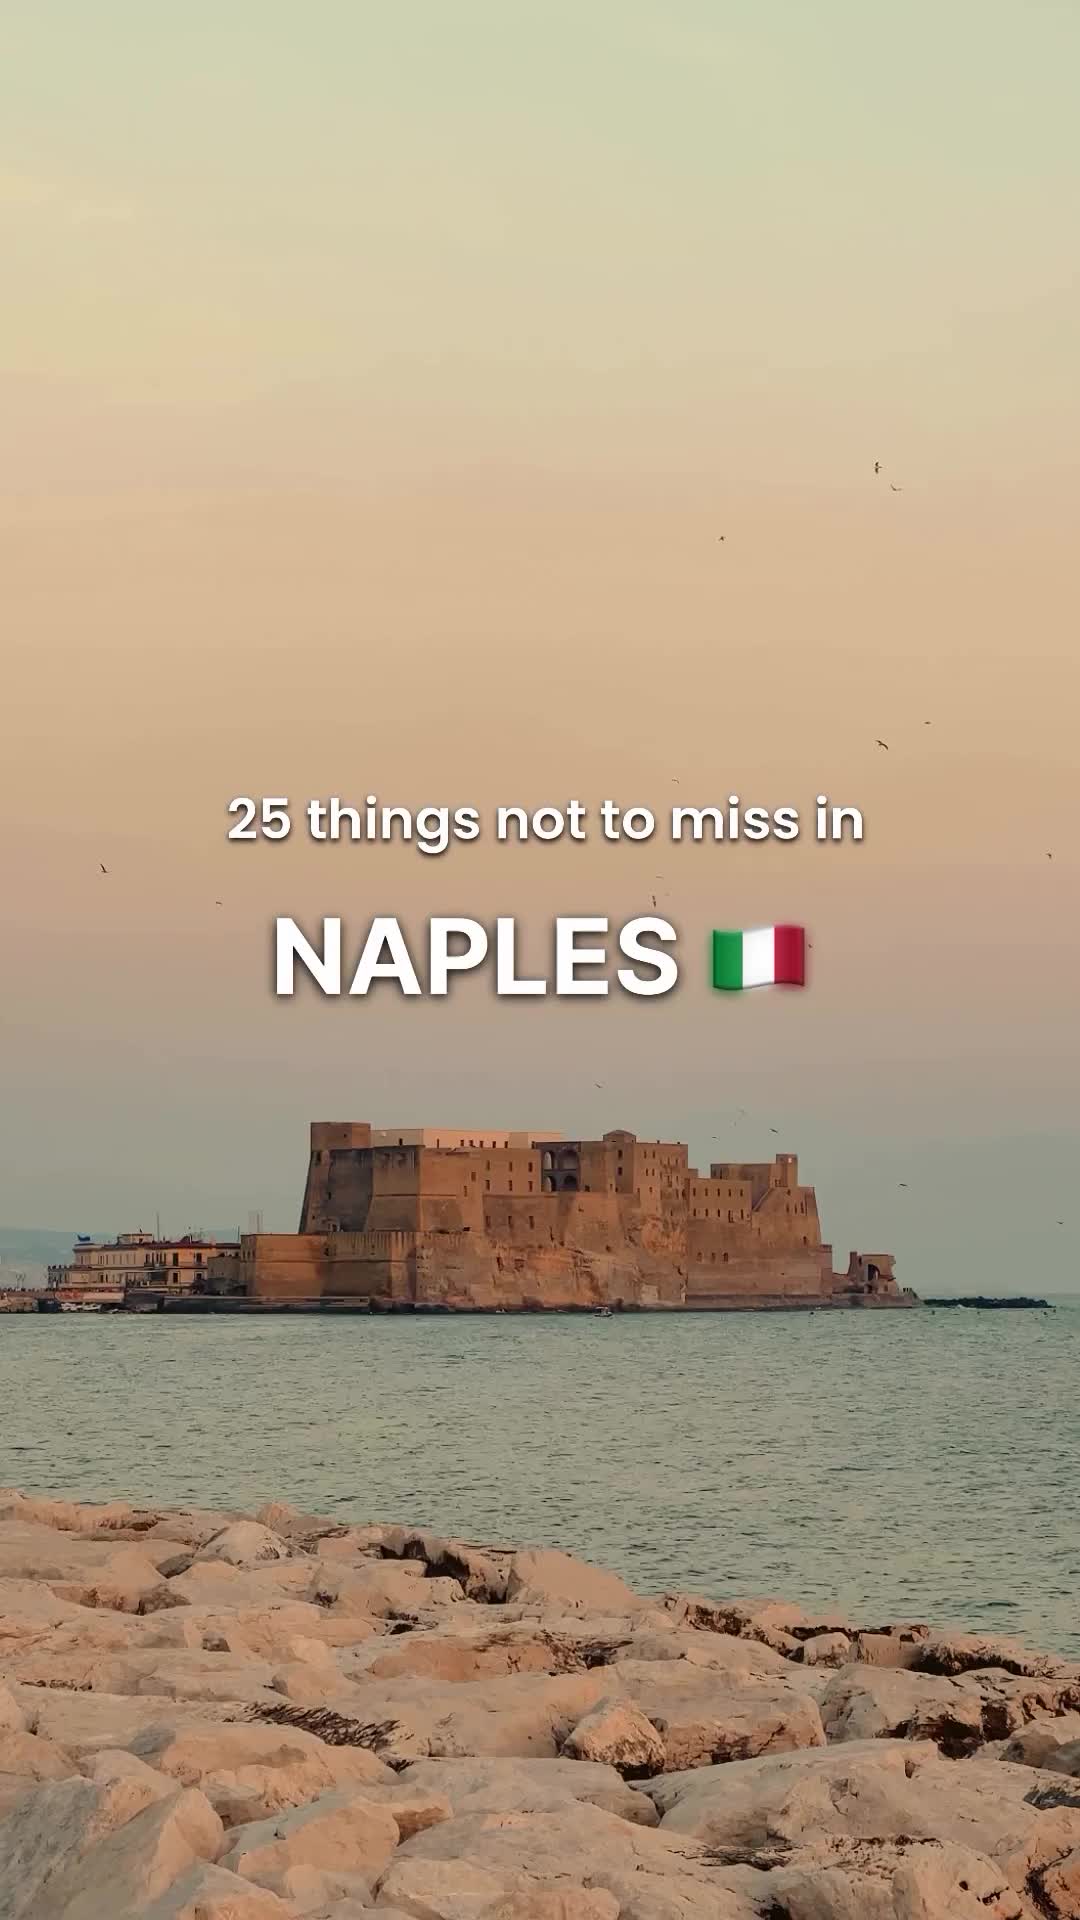 Best Sunset Spot in Naples: Castel dell’Ovo